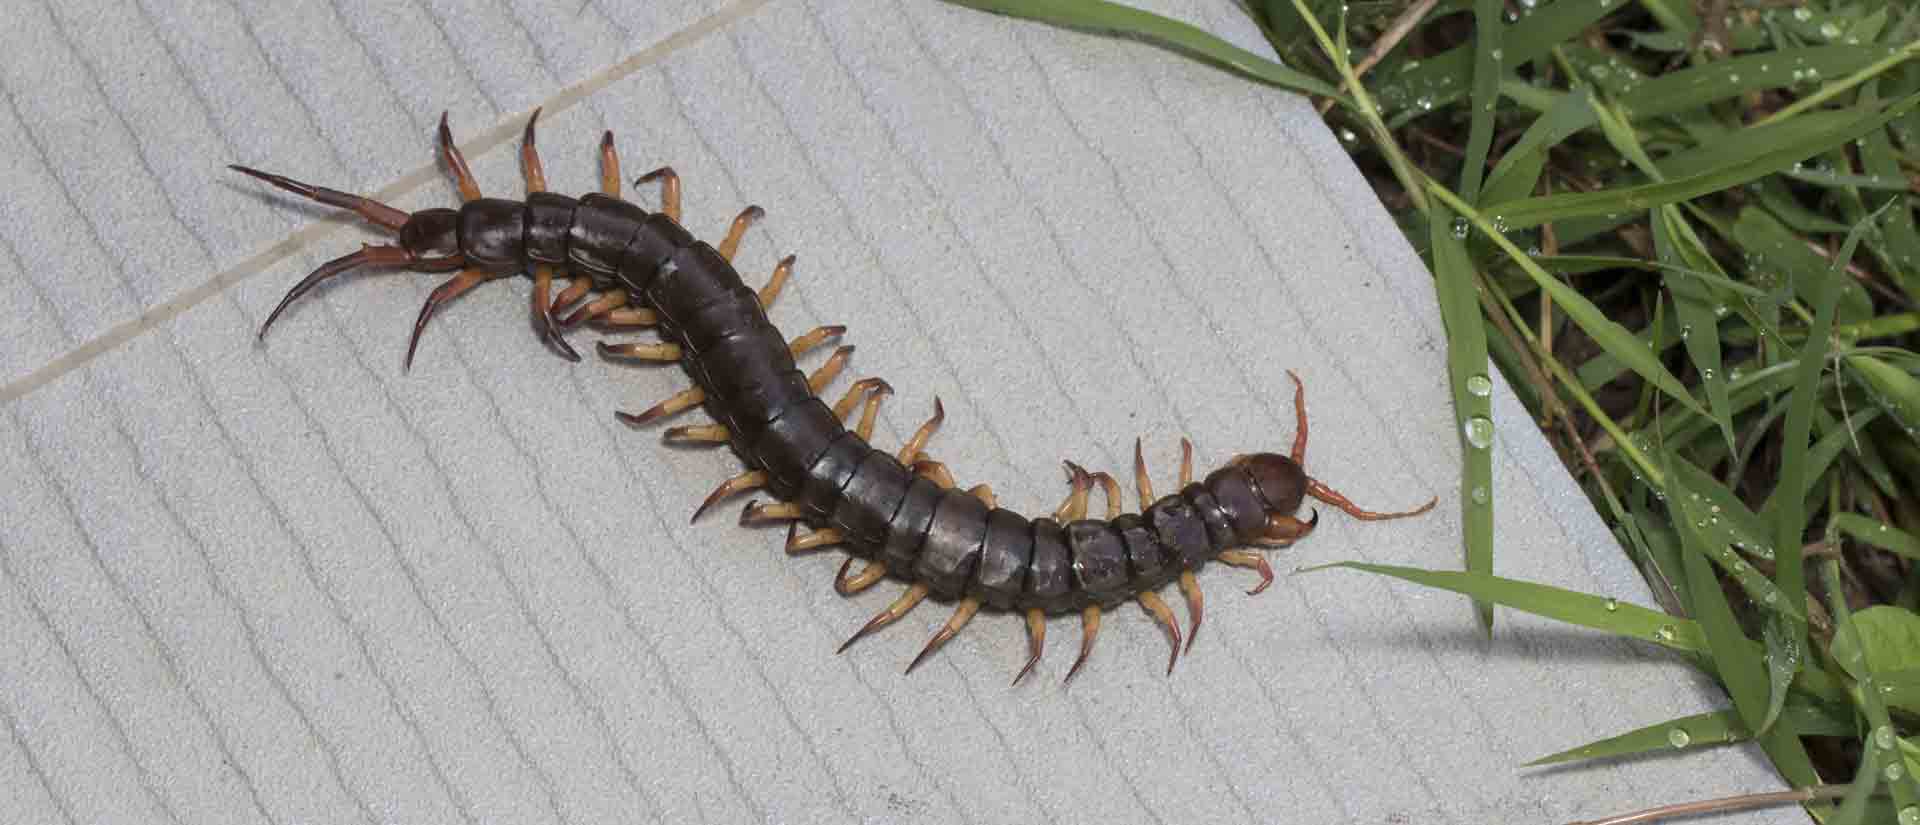 centipede pest control santee